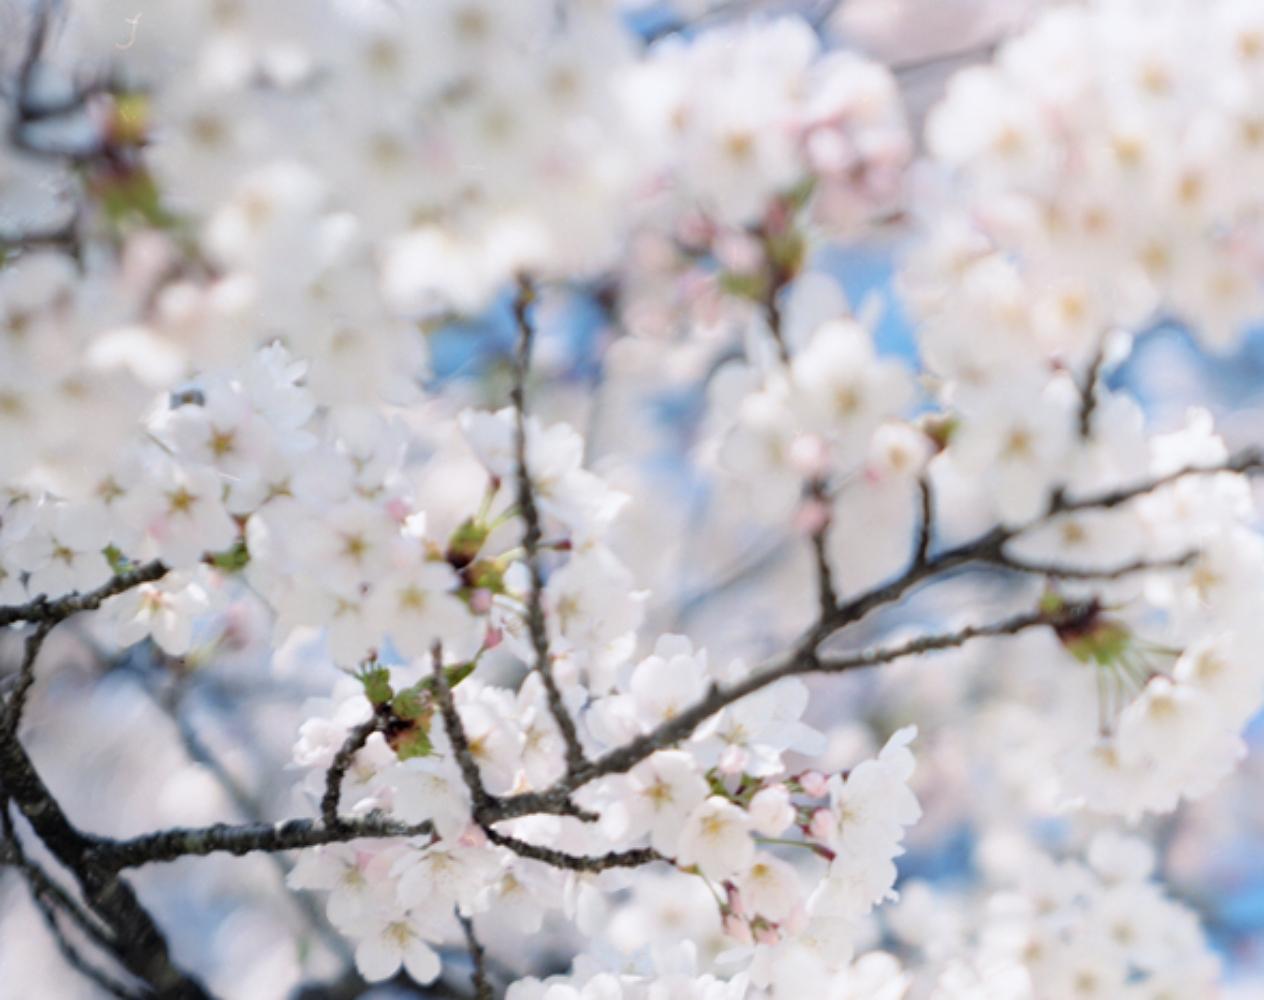 RISAKU SUZUKI (*1963, Japan)
SAKURA 15,4-94
2015
Chromogenic print
Sheet 75 x 60 cm (29 1/2 x 23 5/8 in.)
Edition of 5; Ed. no. 1/10
Framed

The Sakura (Japanese term for ‘cherry blossoms’) Celebration commences in early spring and has inspired